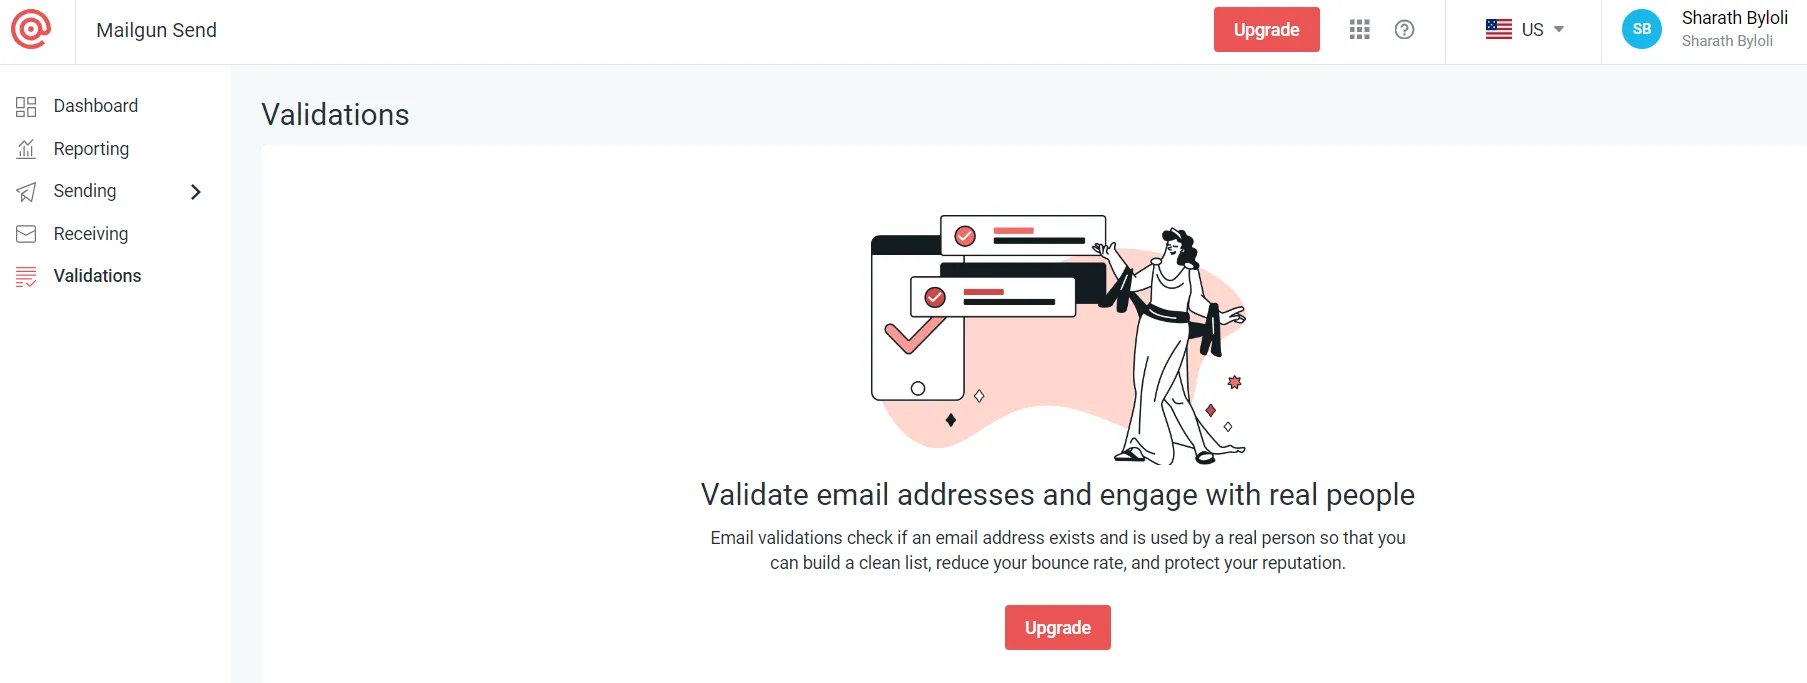 bulk email service, Mailgun’s email validation API